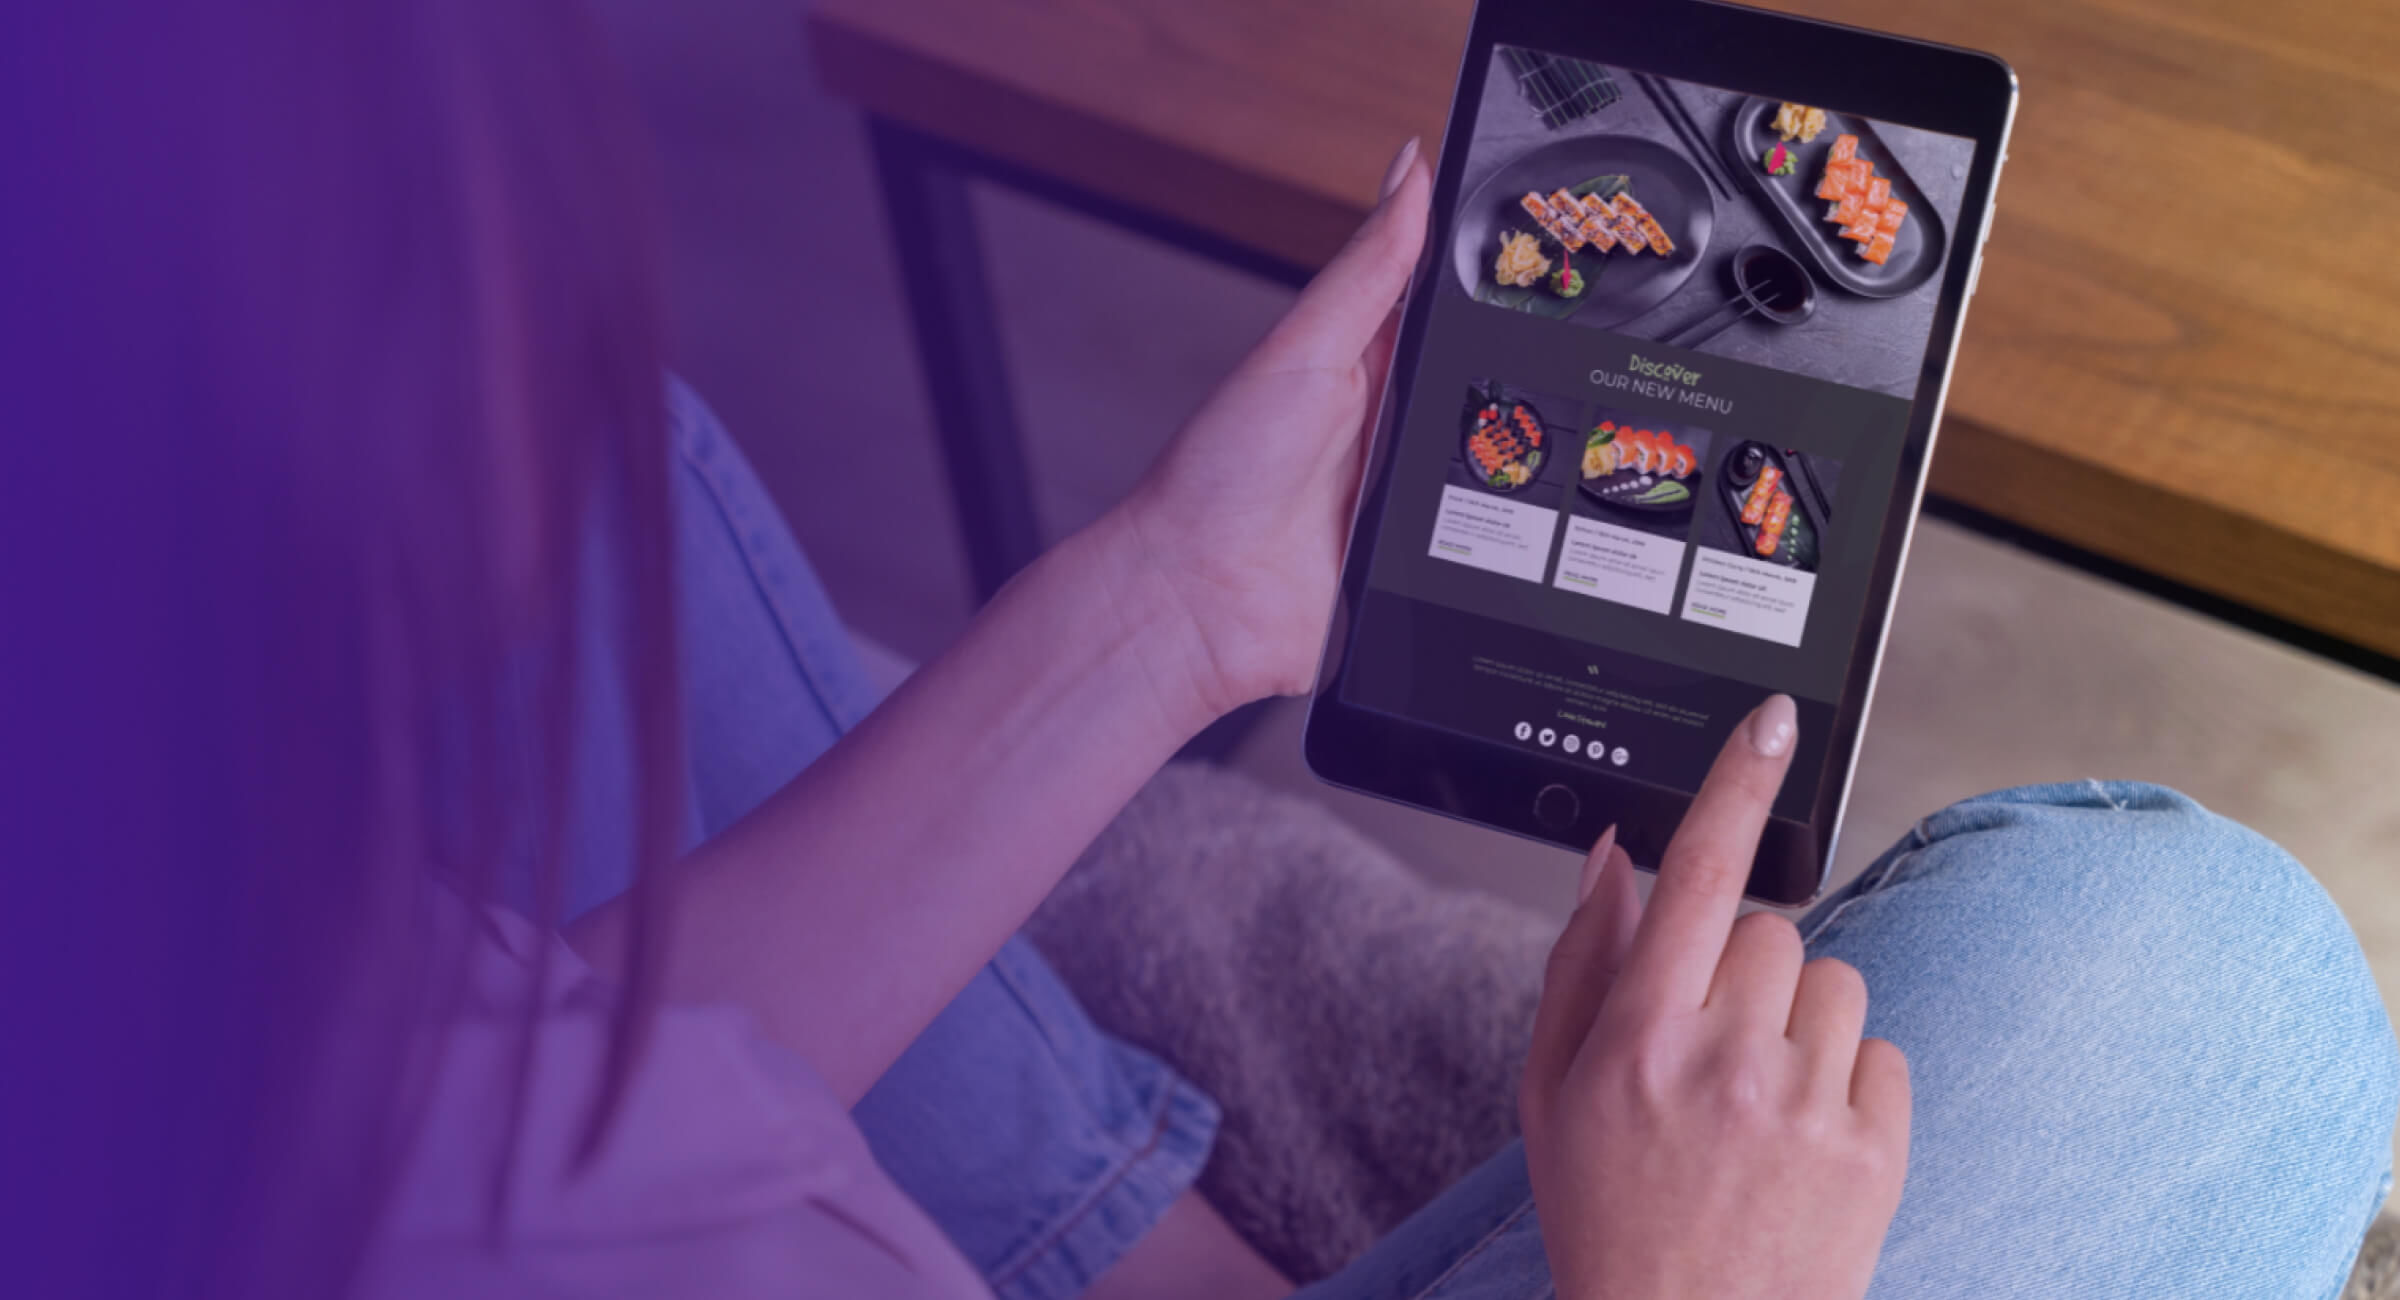 Omilia Launches Quick-Serve Food Ordering AI to Revolutionize Restaurant Transactions